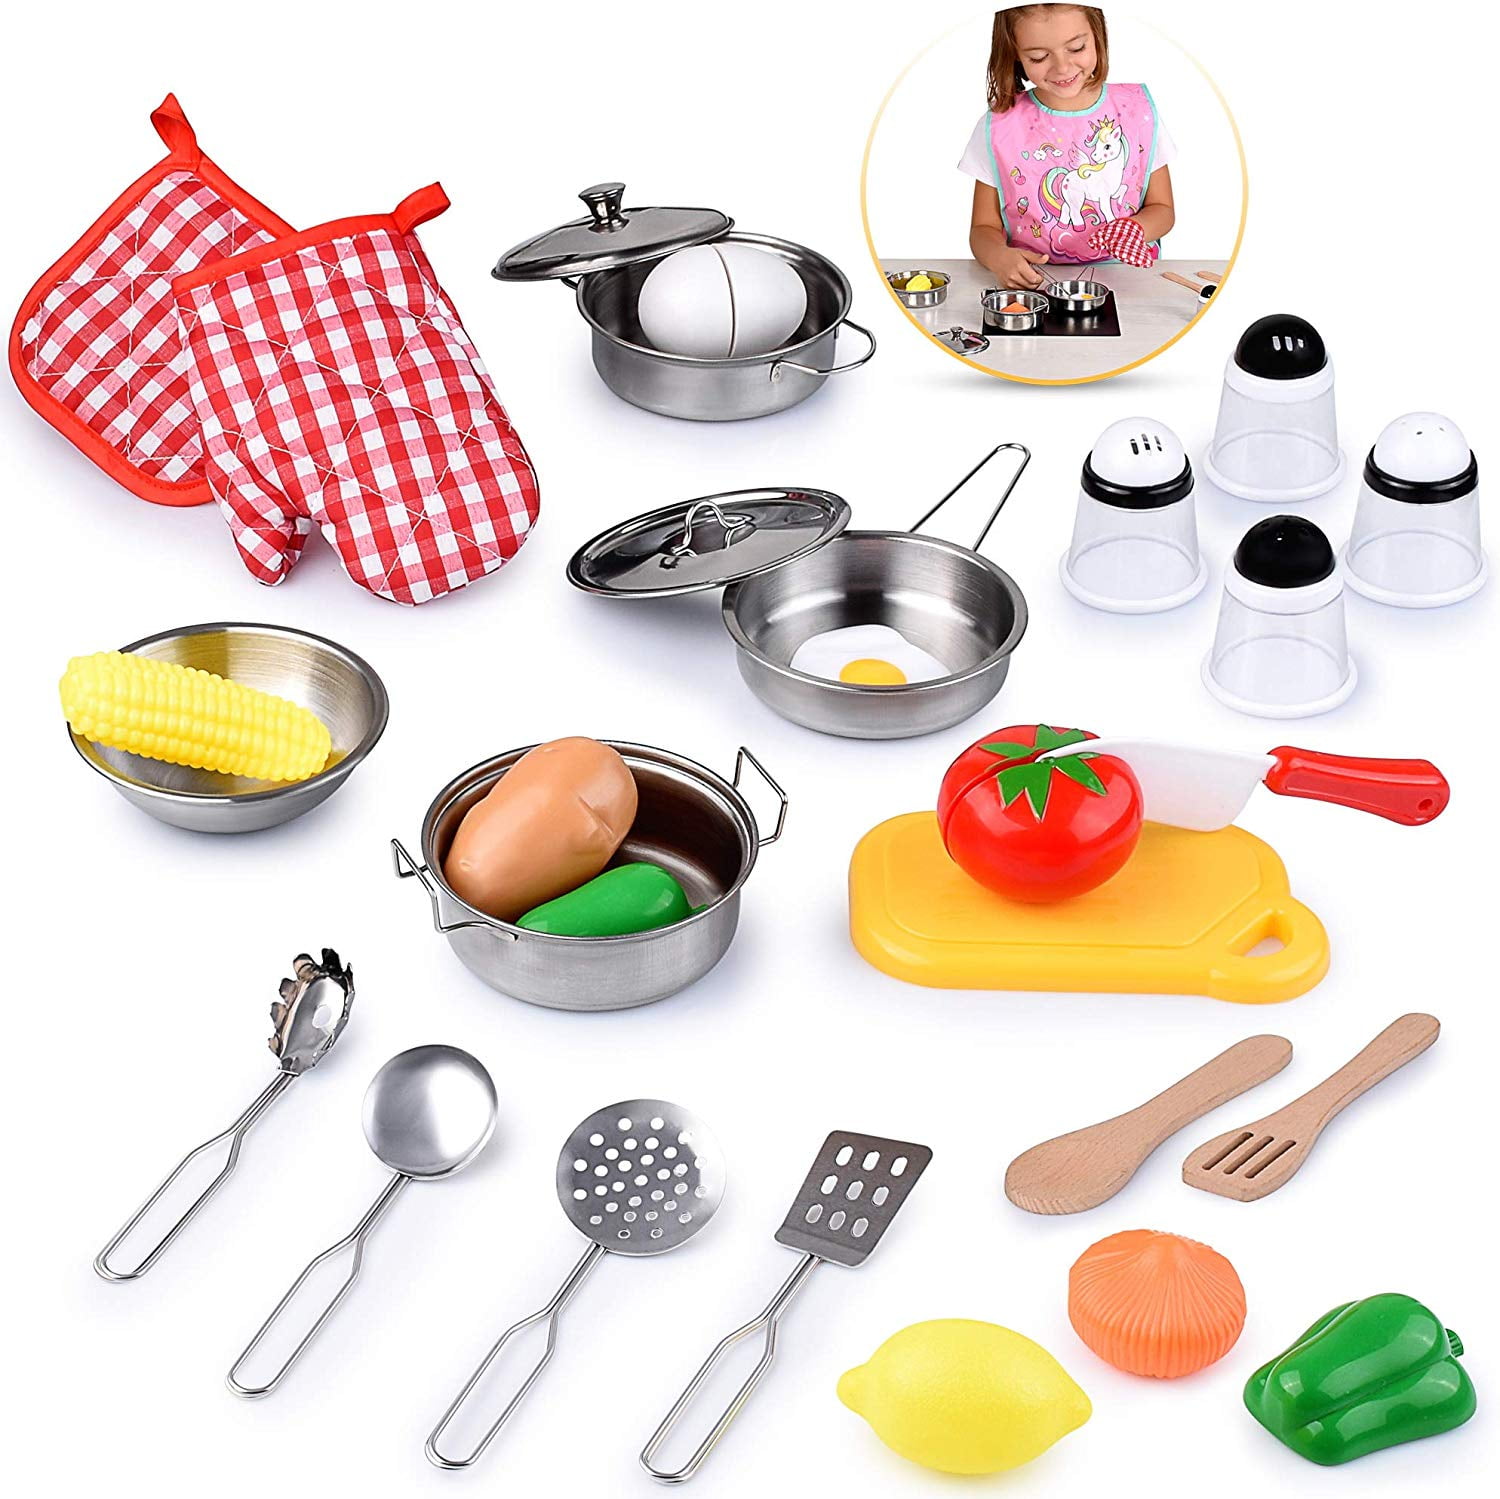 Children Kids Kitchen Utensils Pots Pans Play Toys Dishes Food Cook Cookin F7X6 